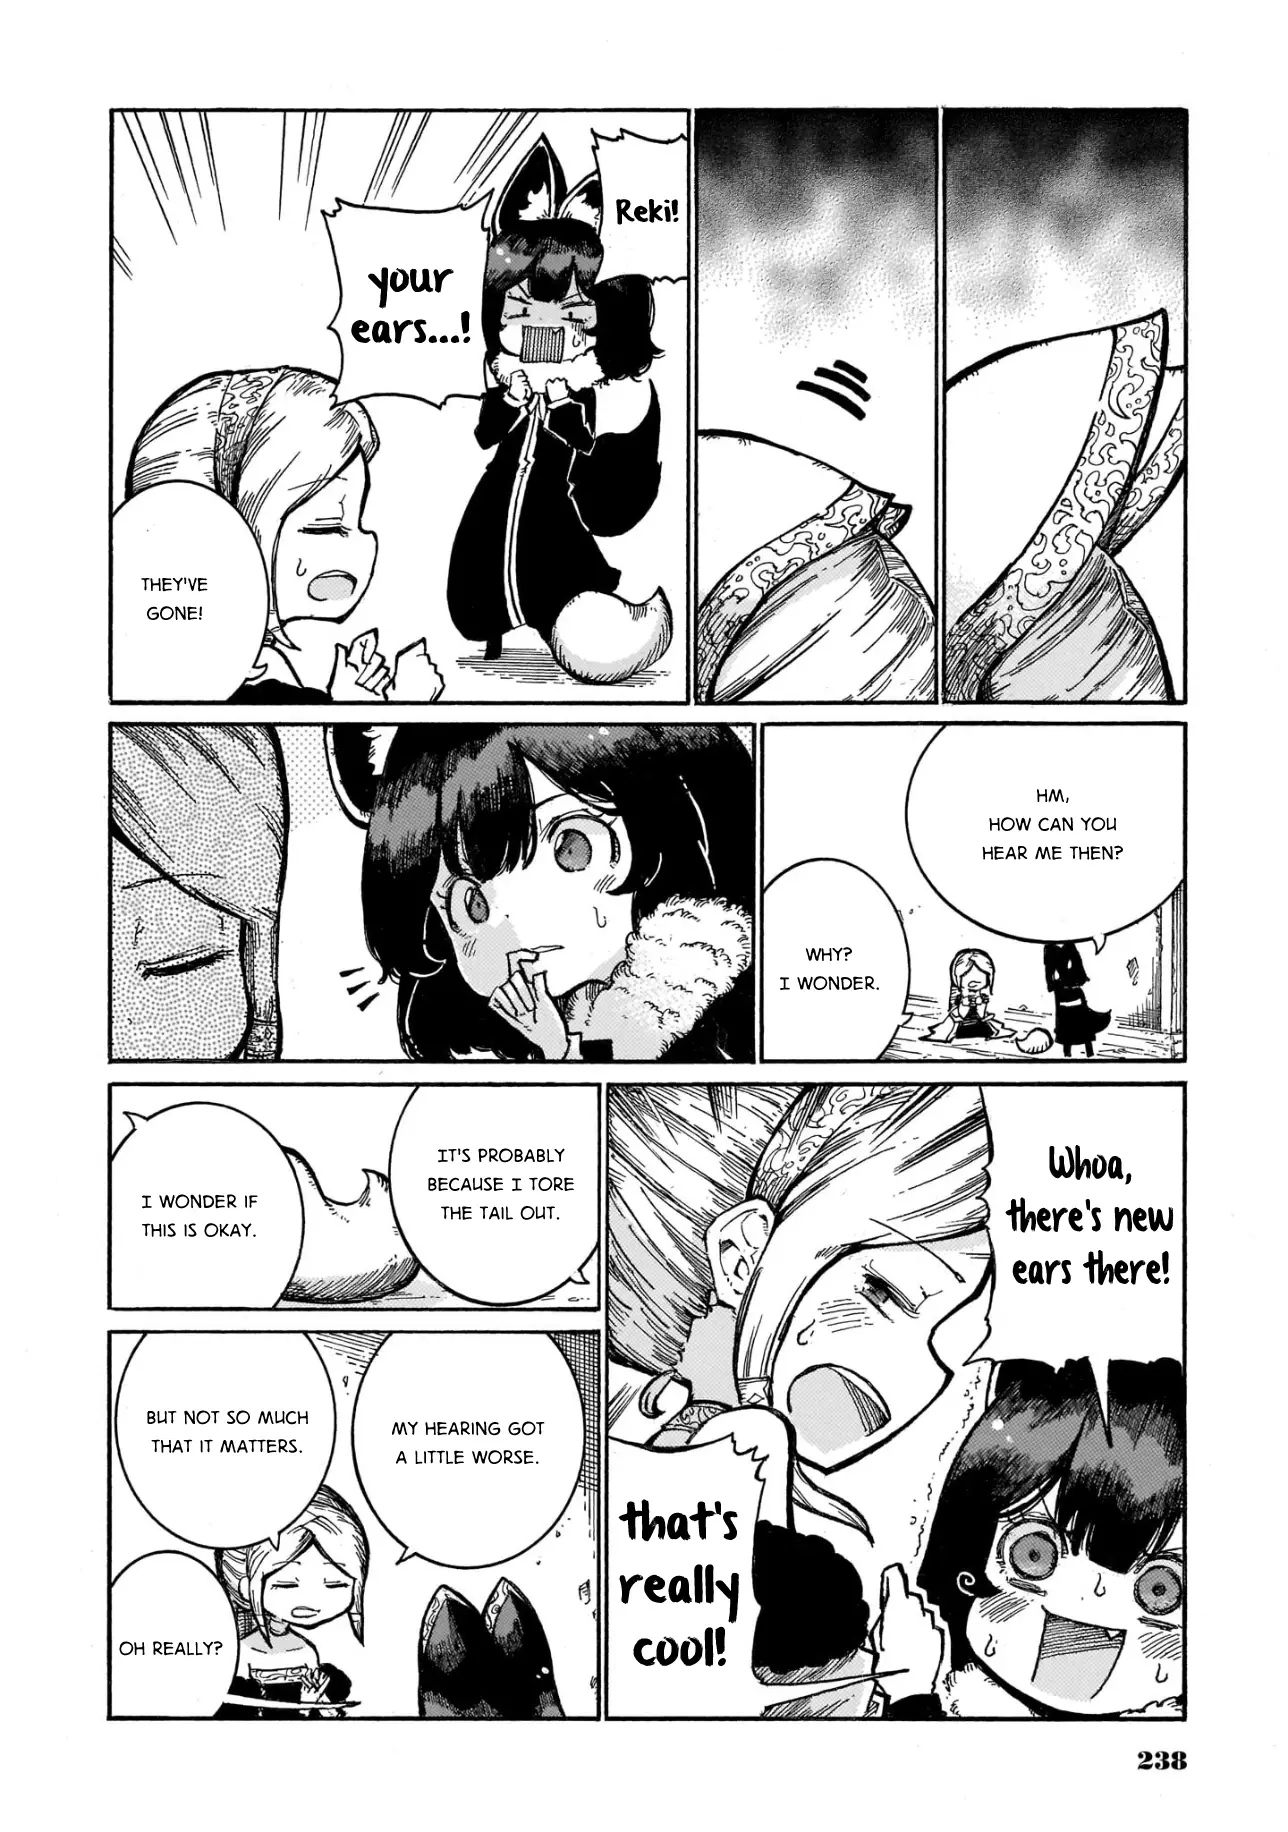 Reki Yomi - 25 page 8